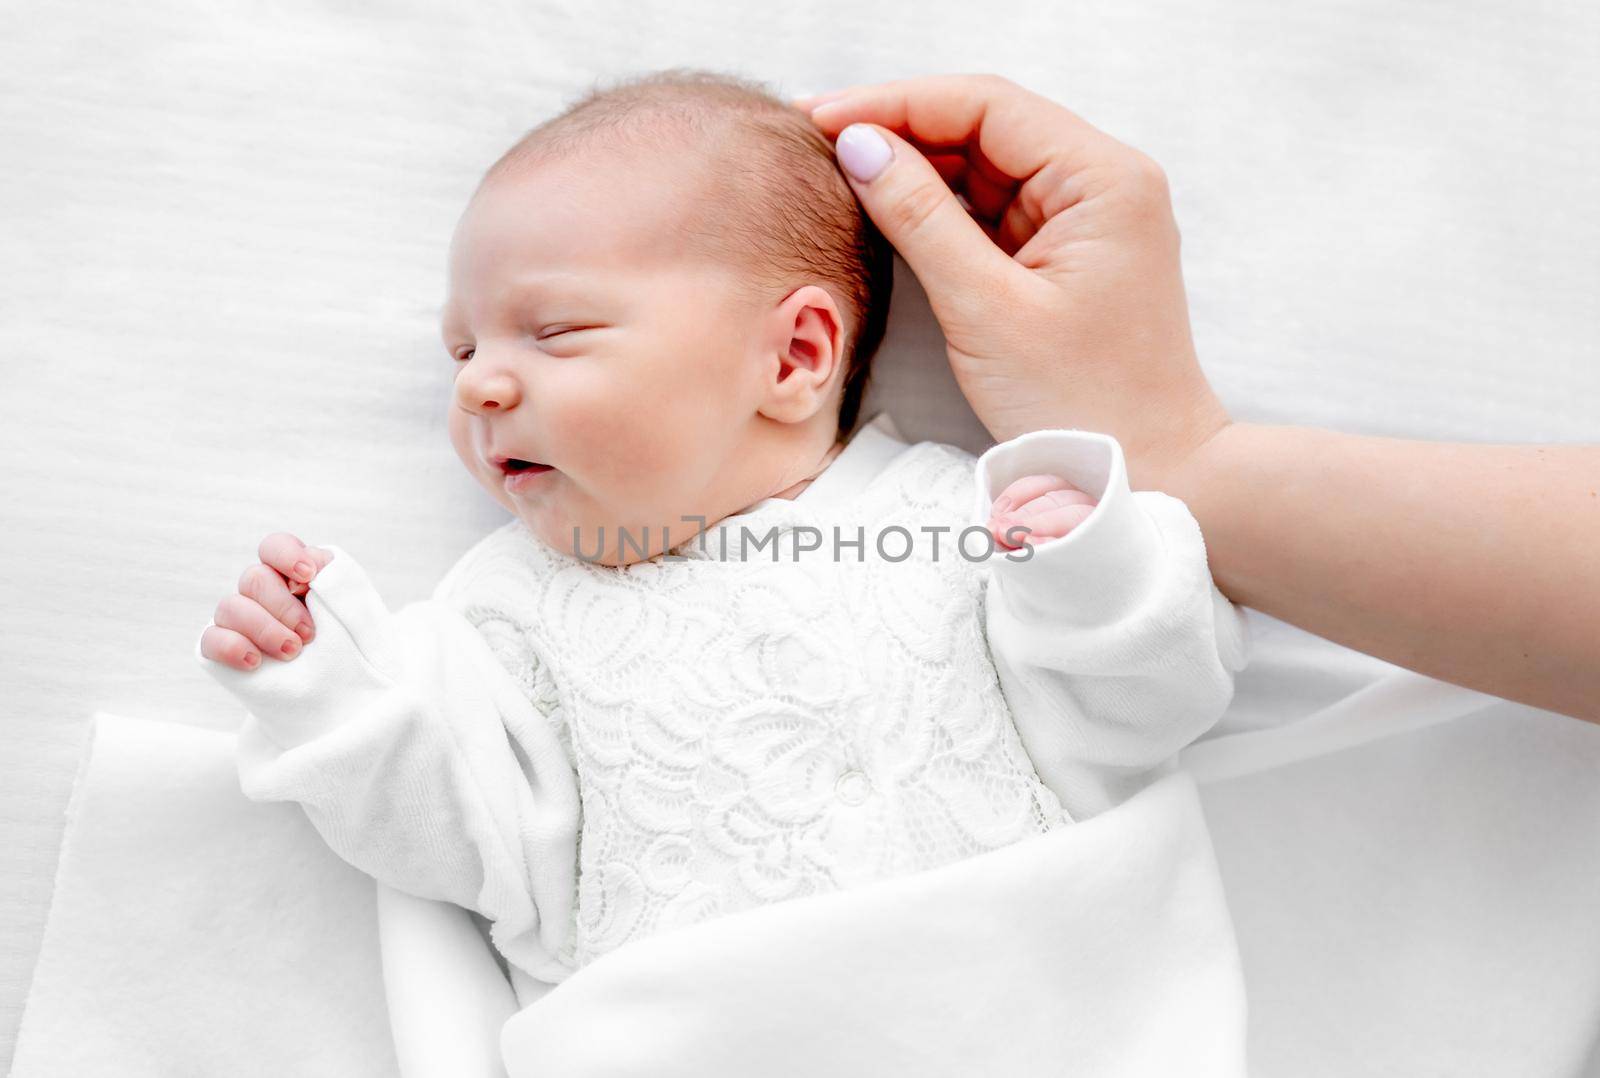 Newborn baby and mother hand by tan4ikk1